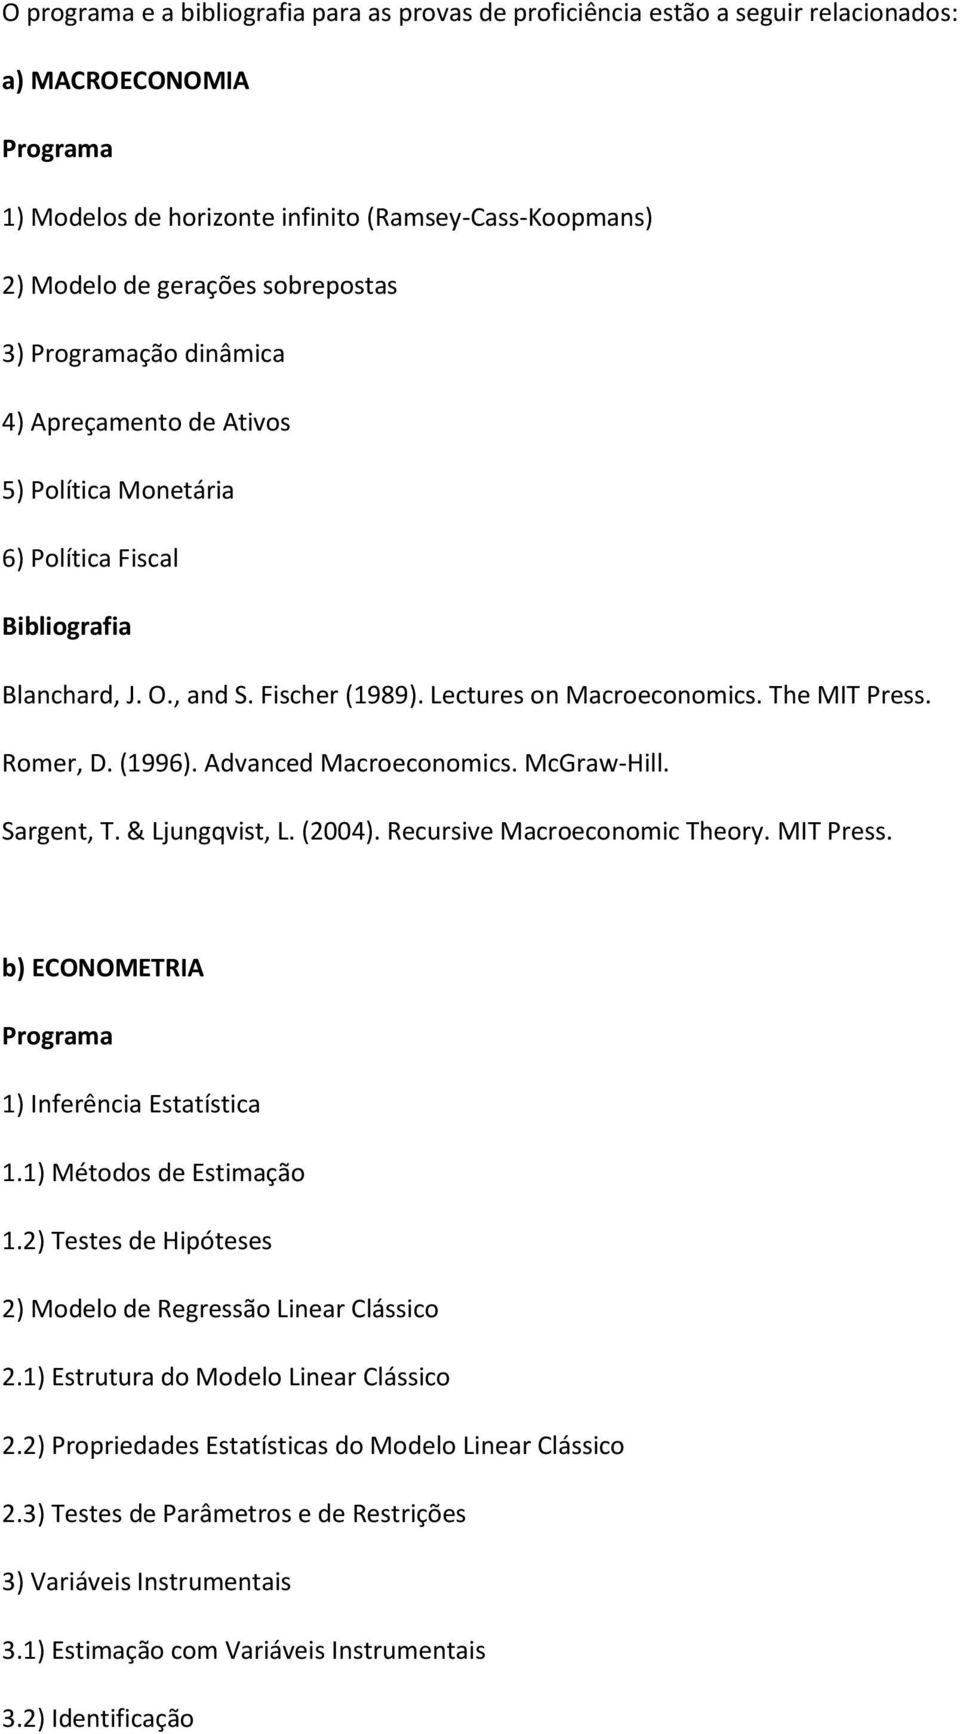 Romer, D. (1996). Advanced Macroeconomics. McGraw-Hill. Sargent, T. & Ljungqvist, L. (2004). Recursive Macroeconomic Theory. MIT Press. b) ECONOMETRIA Programa 1) Inferência Estatística 1.